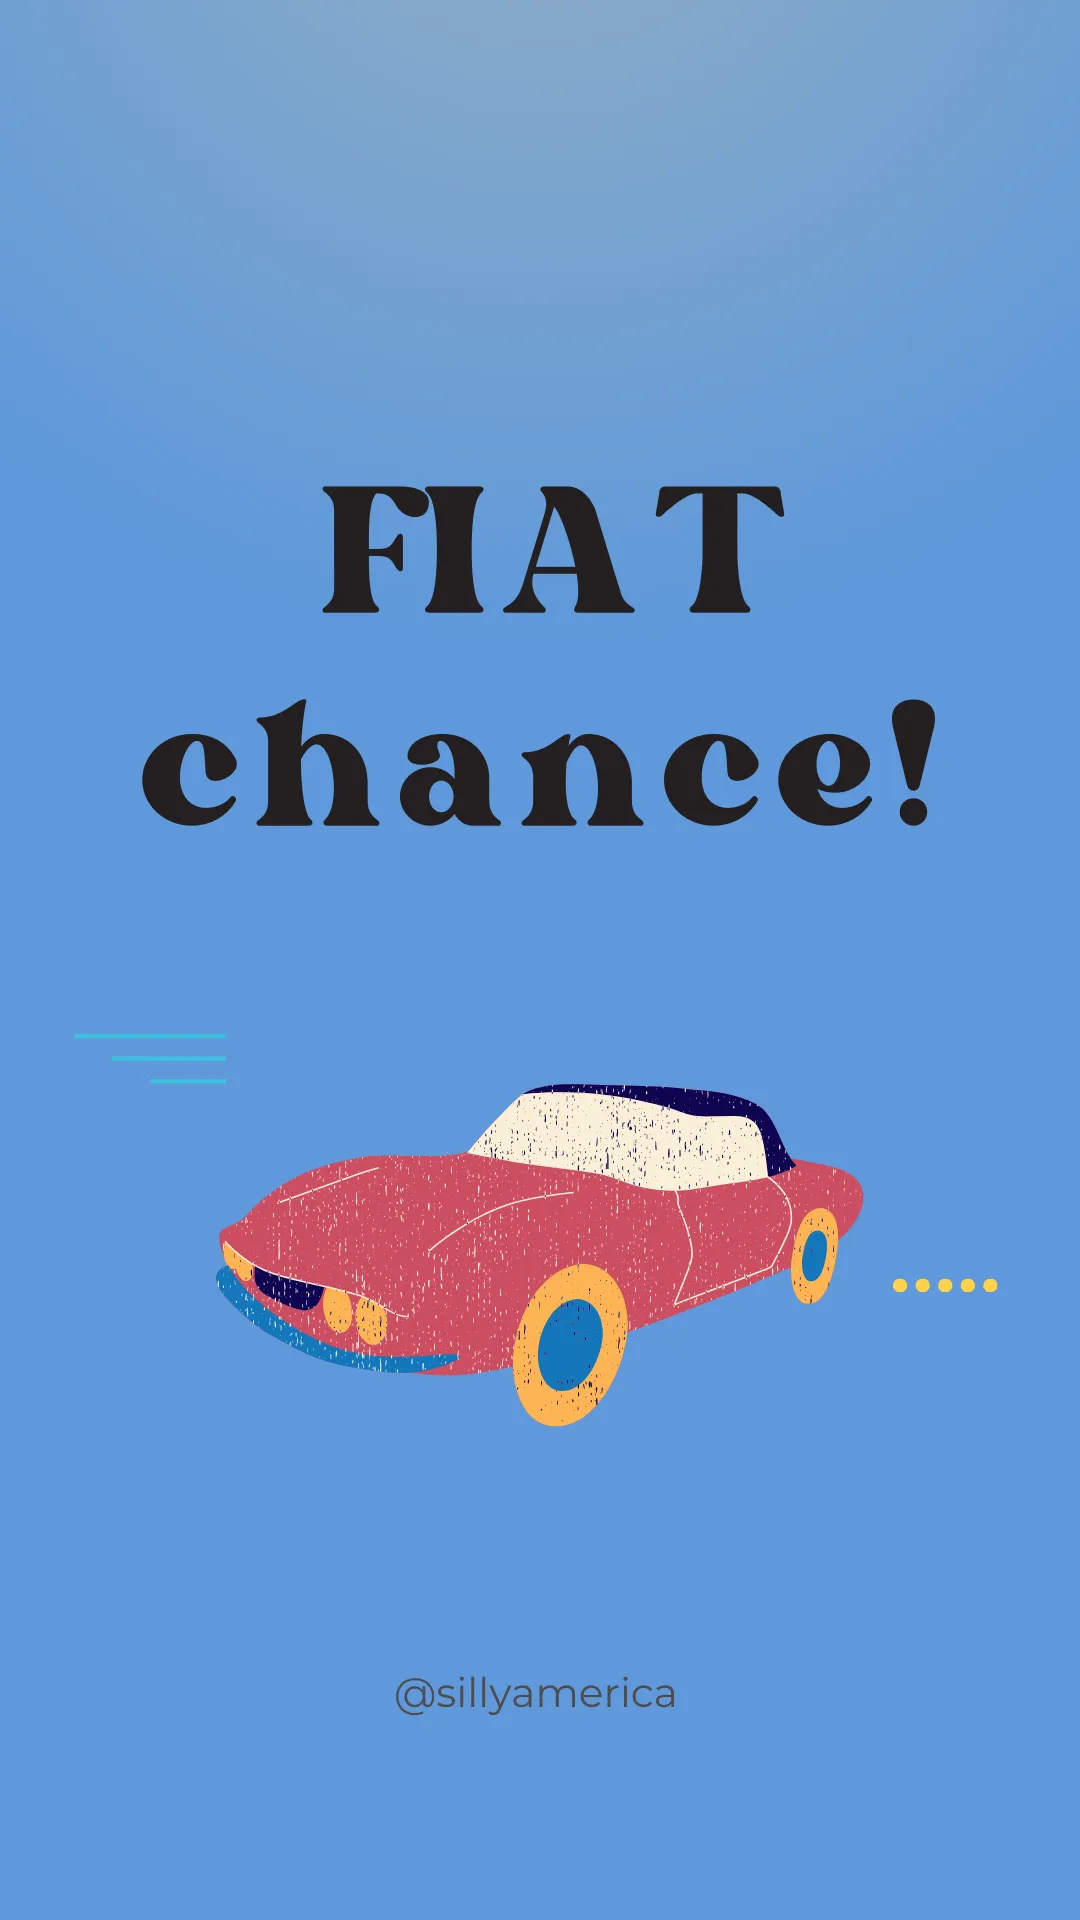 FIAT chance! - Road Trip Puns